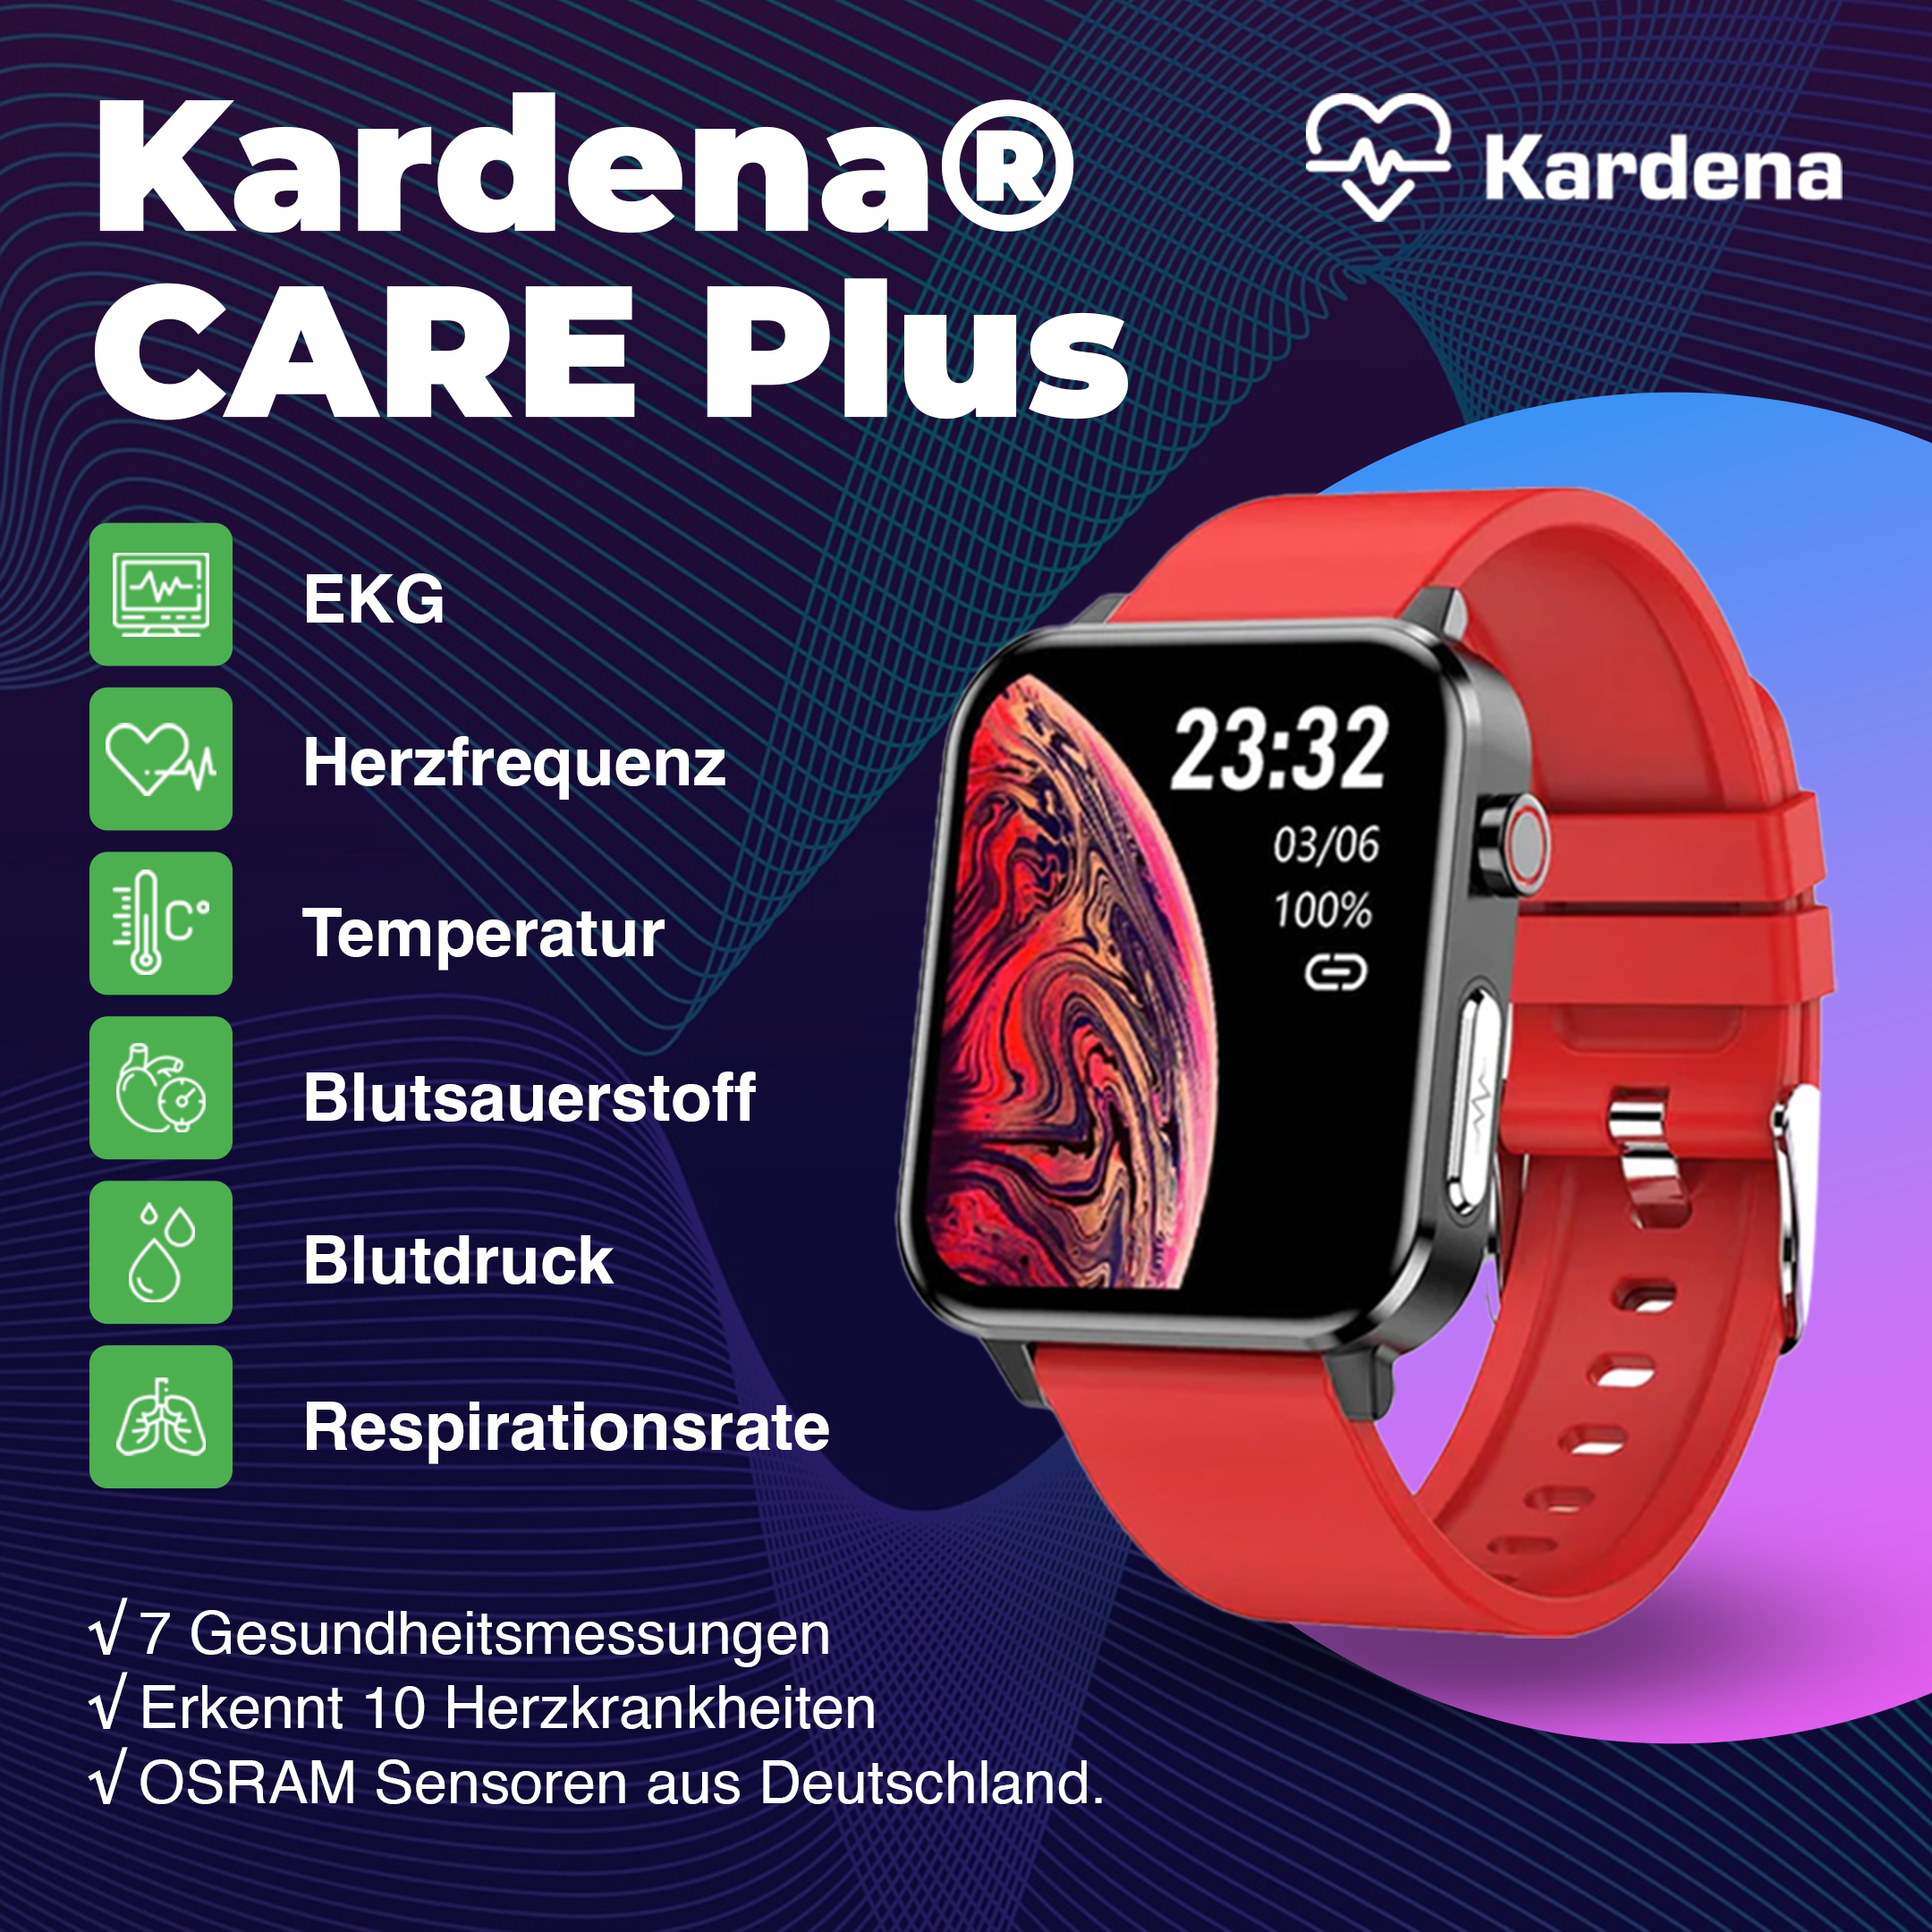 Kardena® CARE Plus